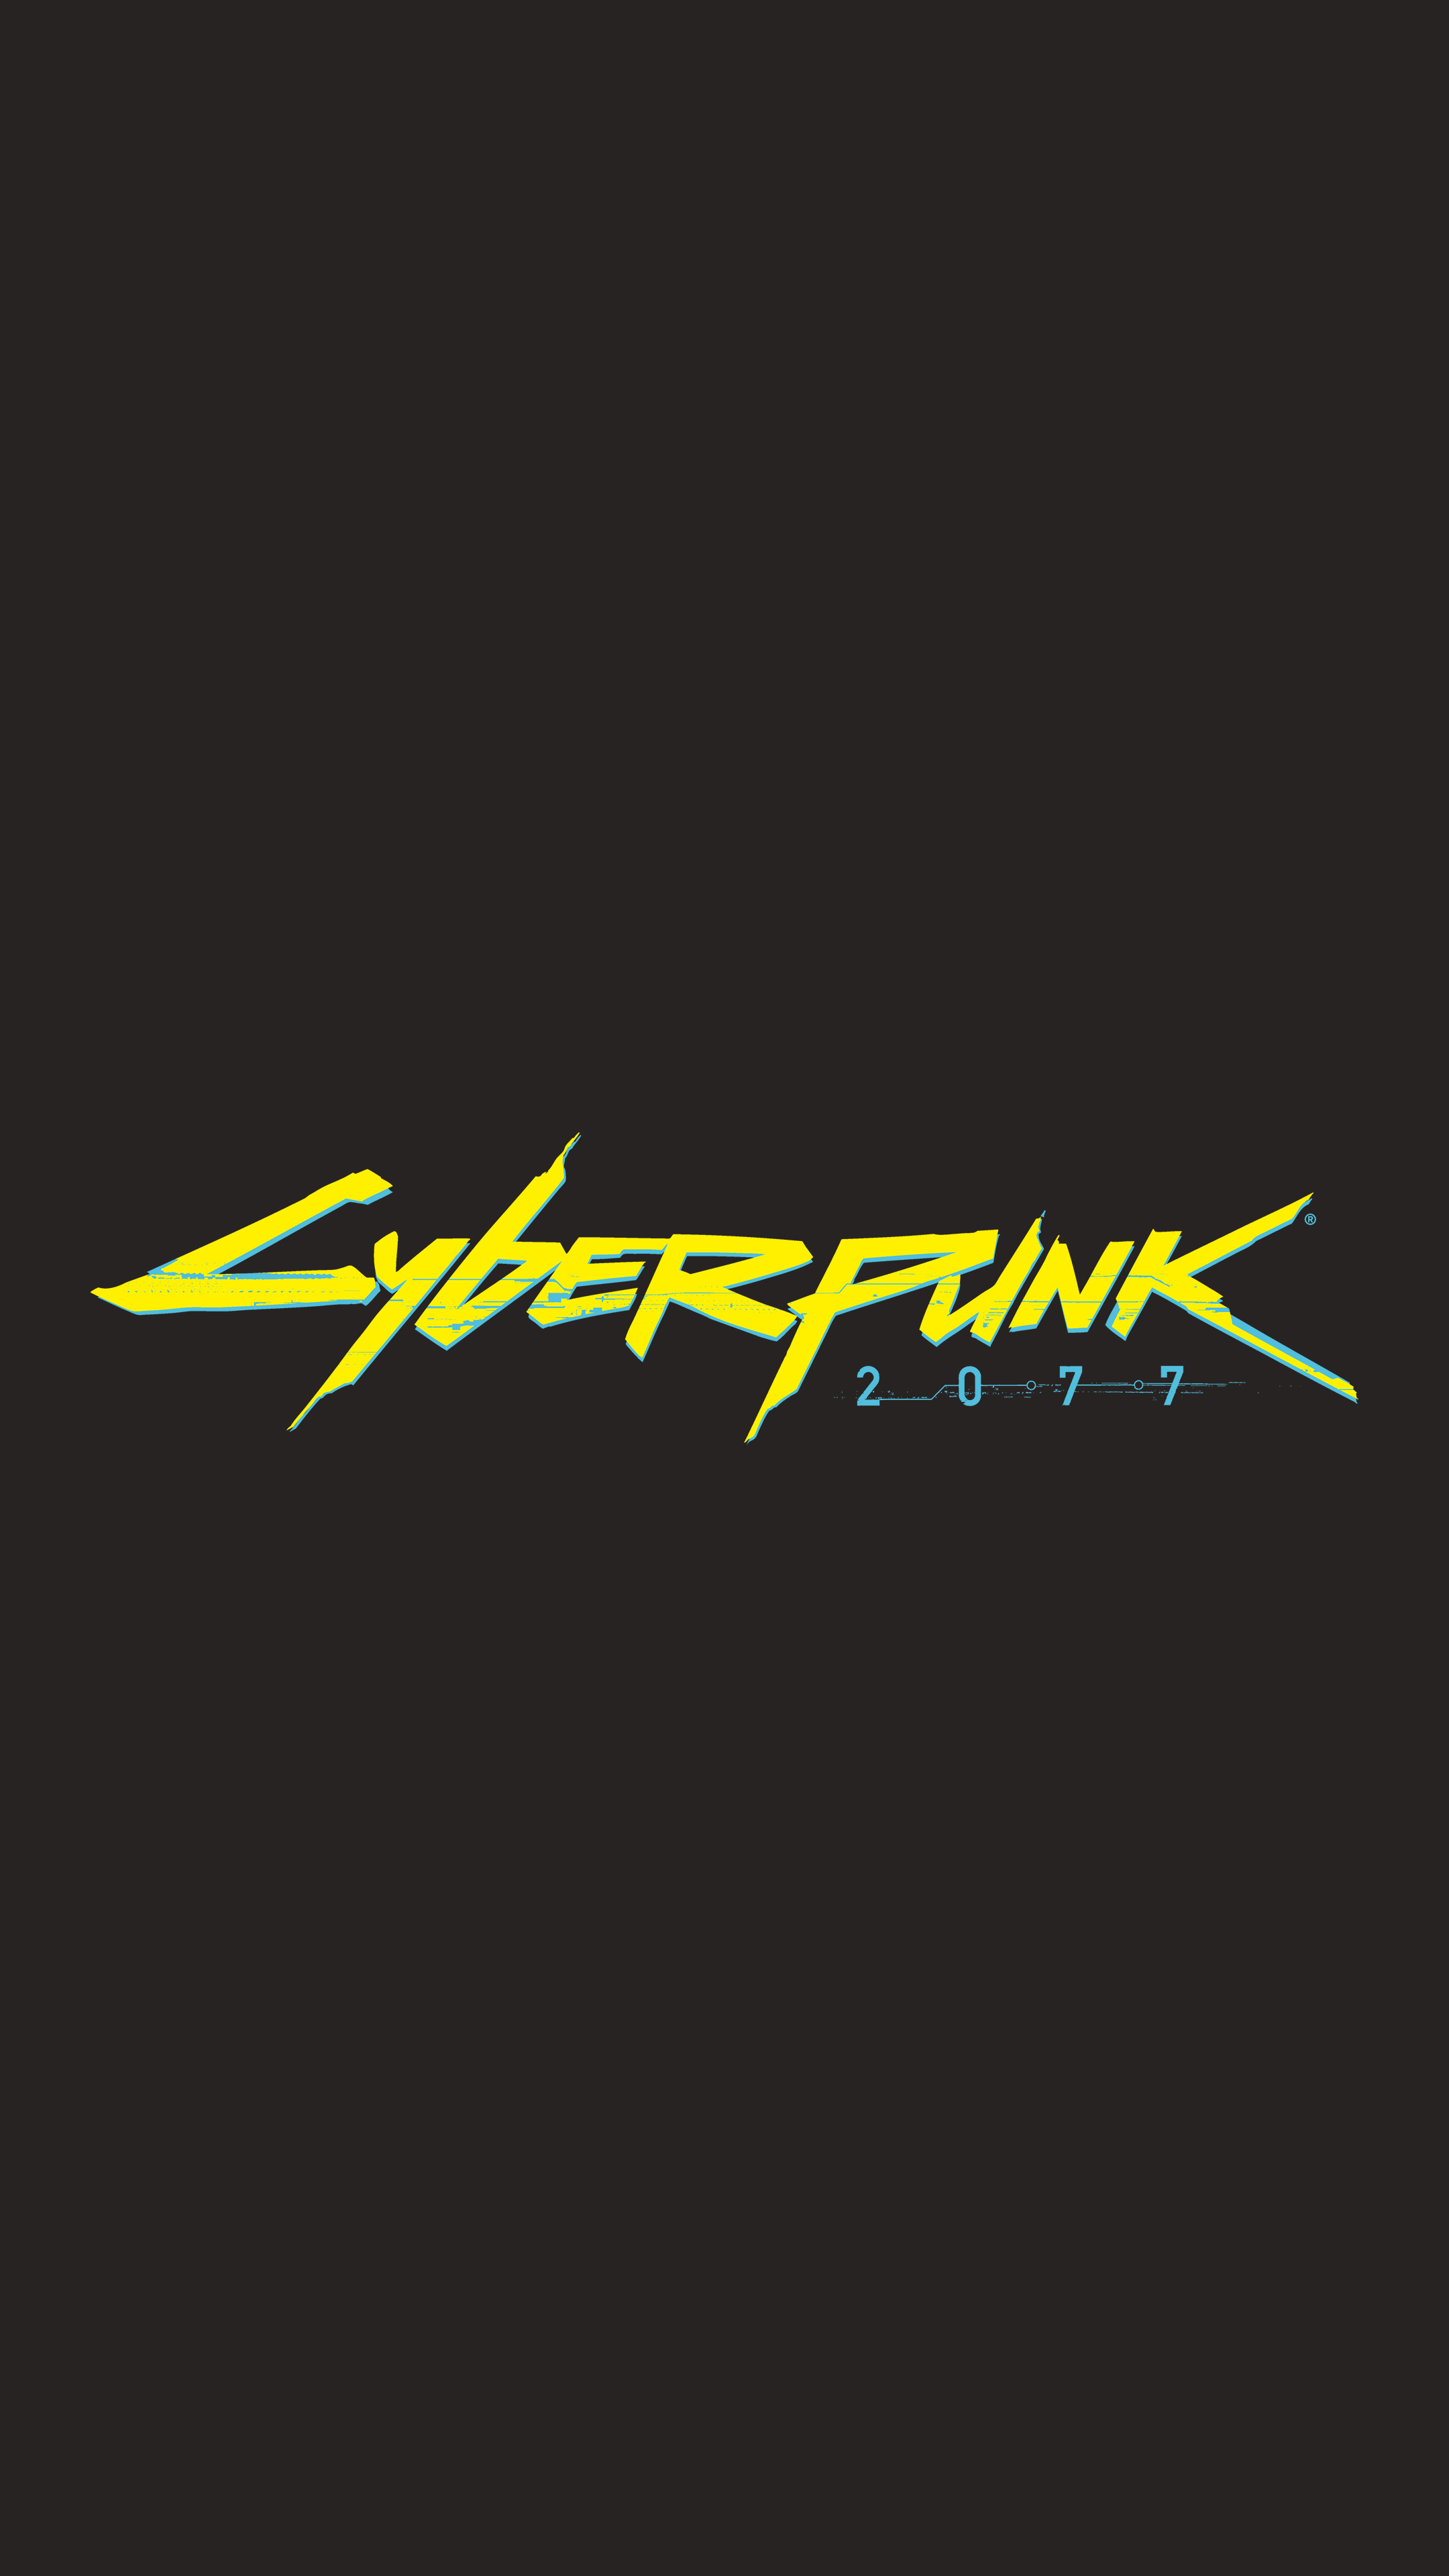 Cyberpunk logo png фото 103